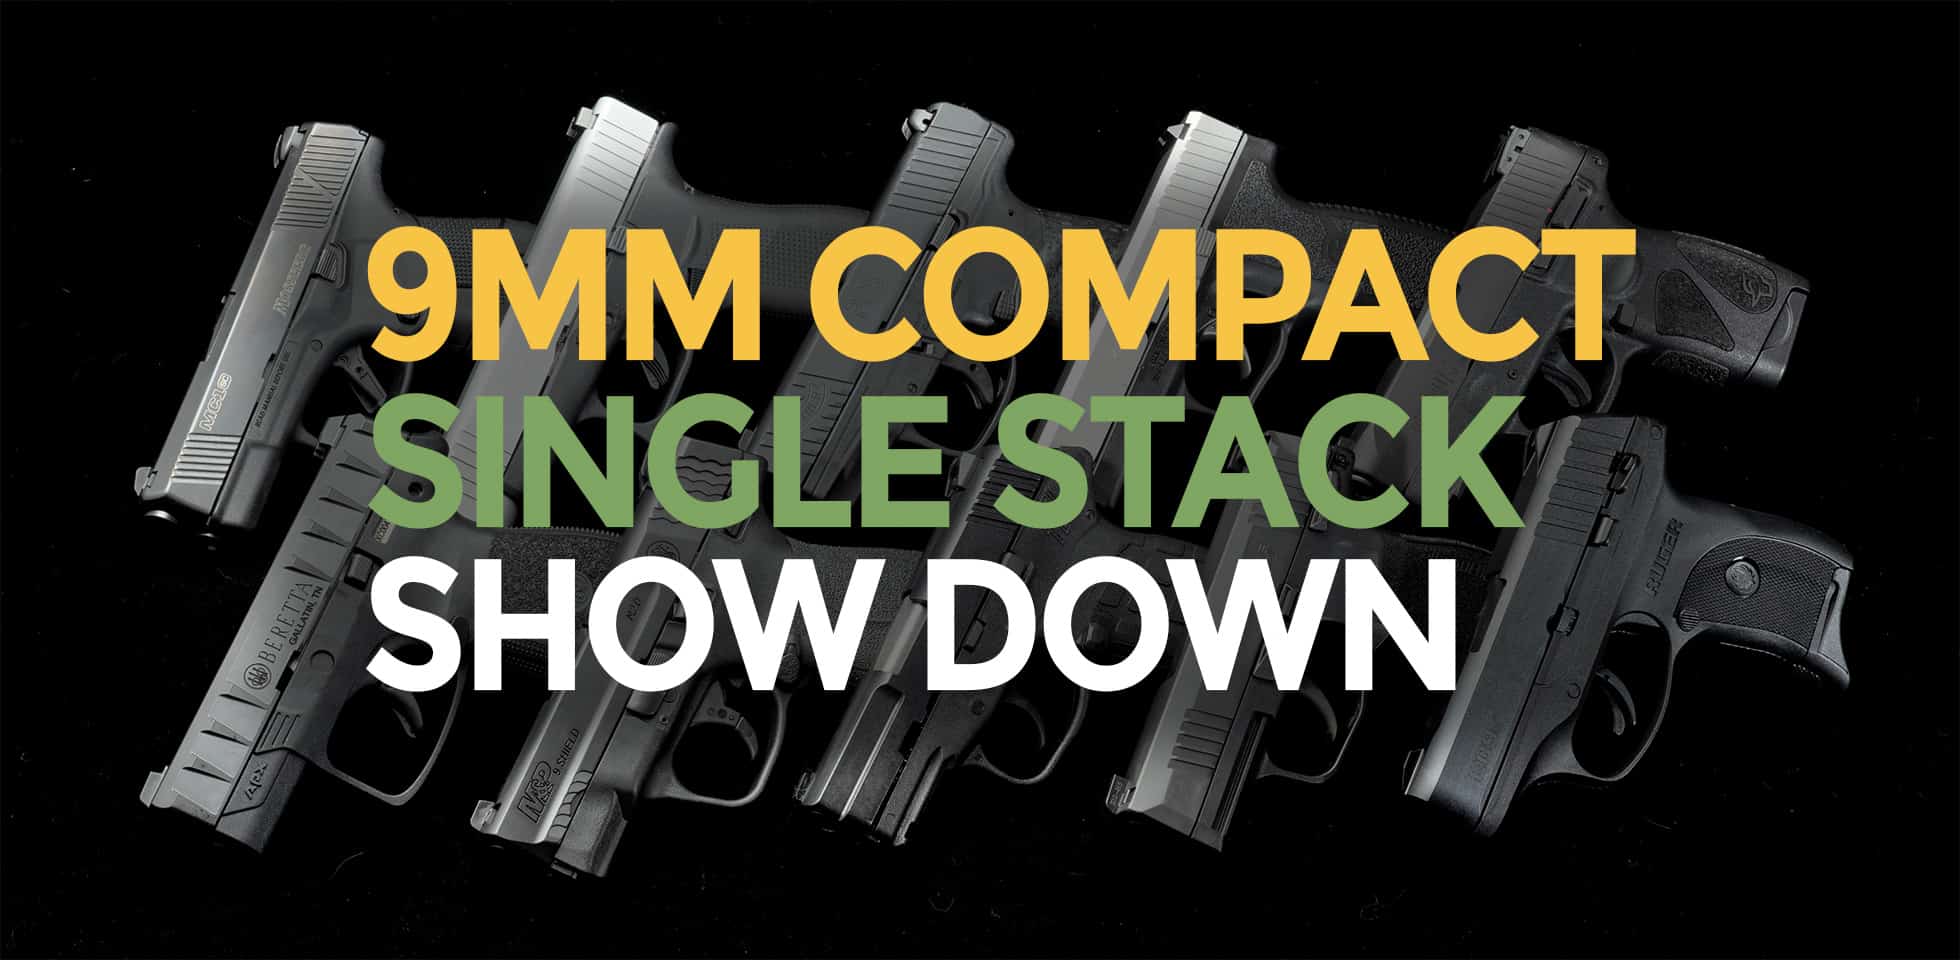 Compact 9mm Single Stack Showdown - AmmoMan School of Guns Blog